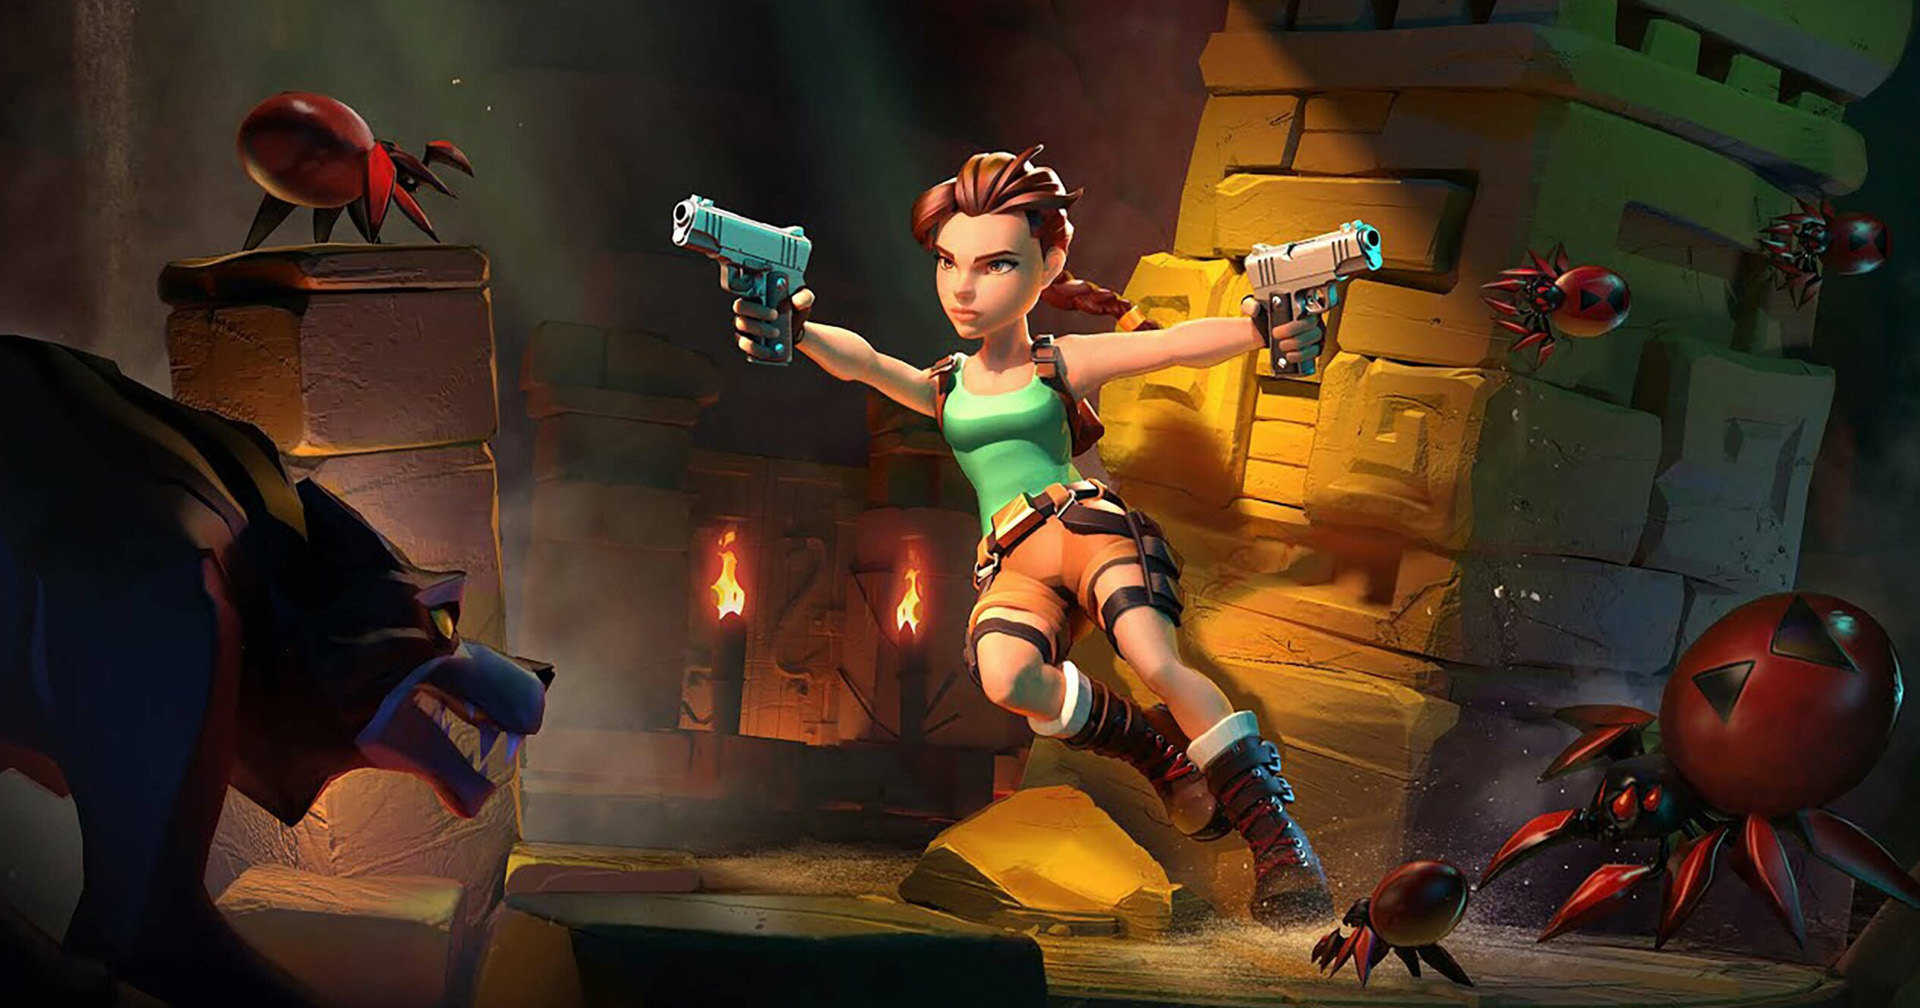 Tomb Raider Reloaded เกมมือถือแฟรนไชส์ดังแนว Roguelike ผจญภัยล่าขุมทรัพย์สุดอันตราย